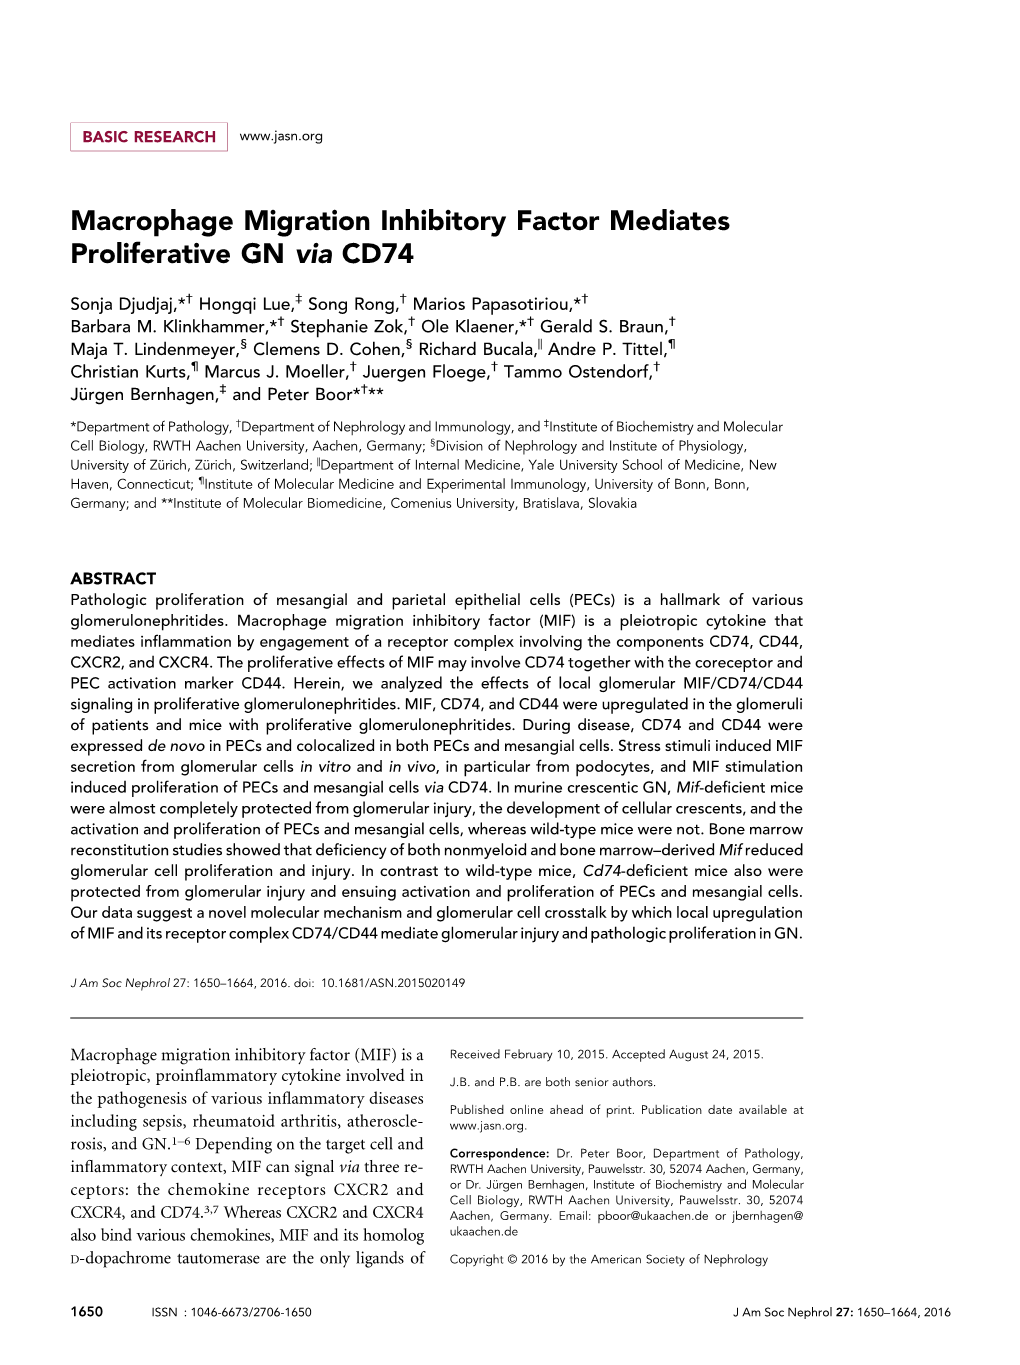 Macrophage Migration Inhibitory Factor Mediates Proliferative GN Via CD74